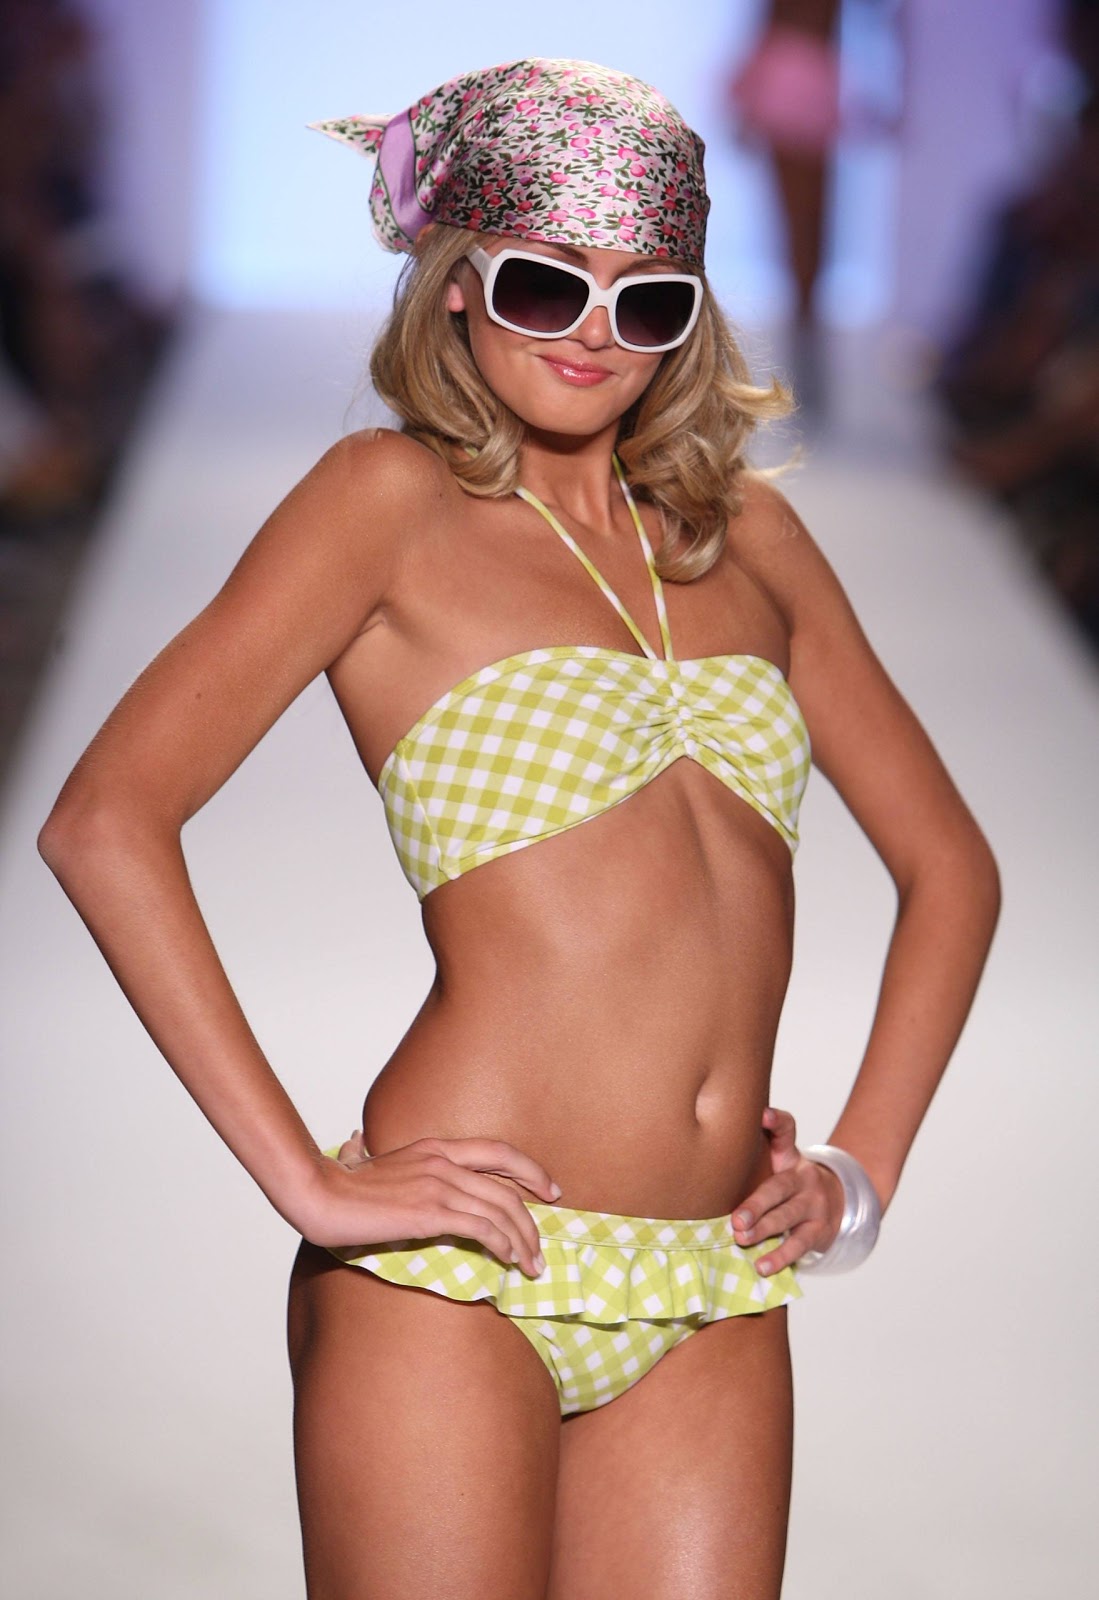 http://4.bp.blogspot.com/_HuE9hjtslp0/TP0R9U0ivtI/AAAAAAAADEY/SN5RMD6OsFg/s1600/bikini+from+Jessica+Simpson%2527s+collection+3.jpg